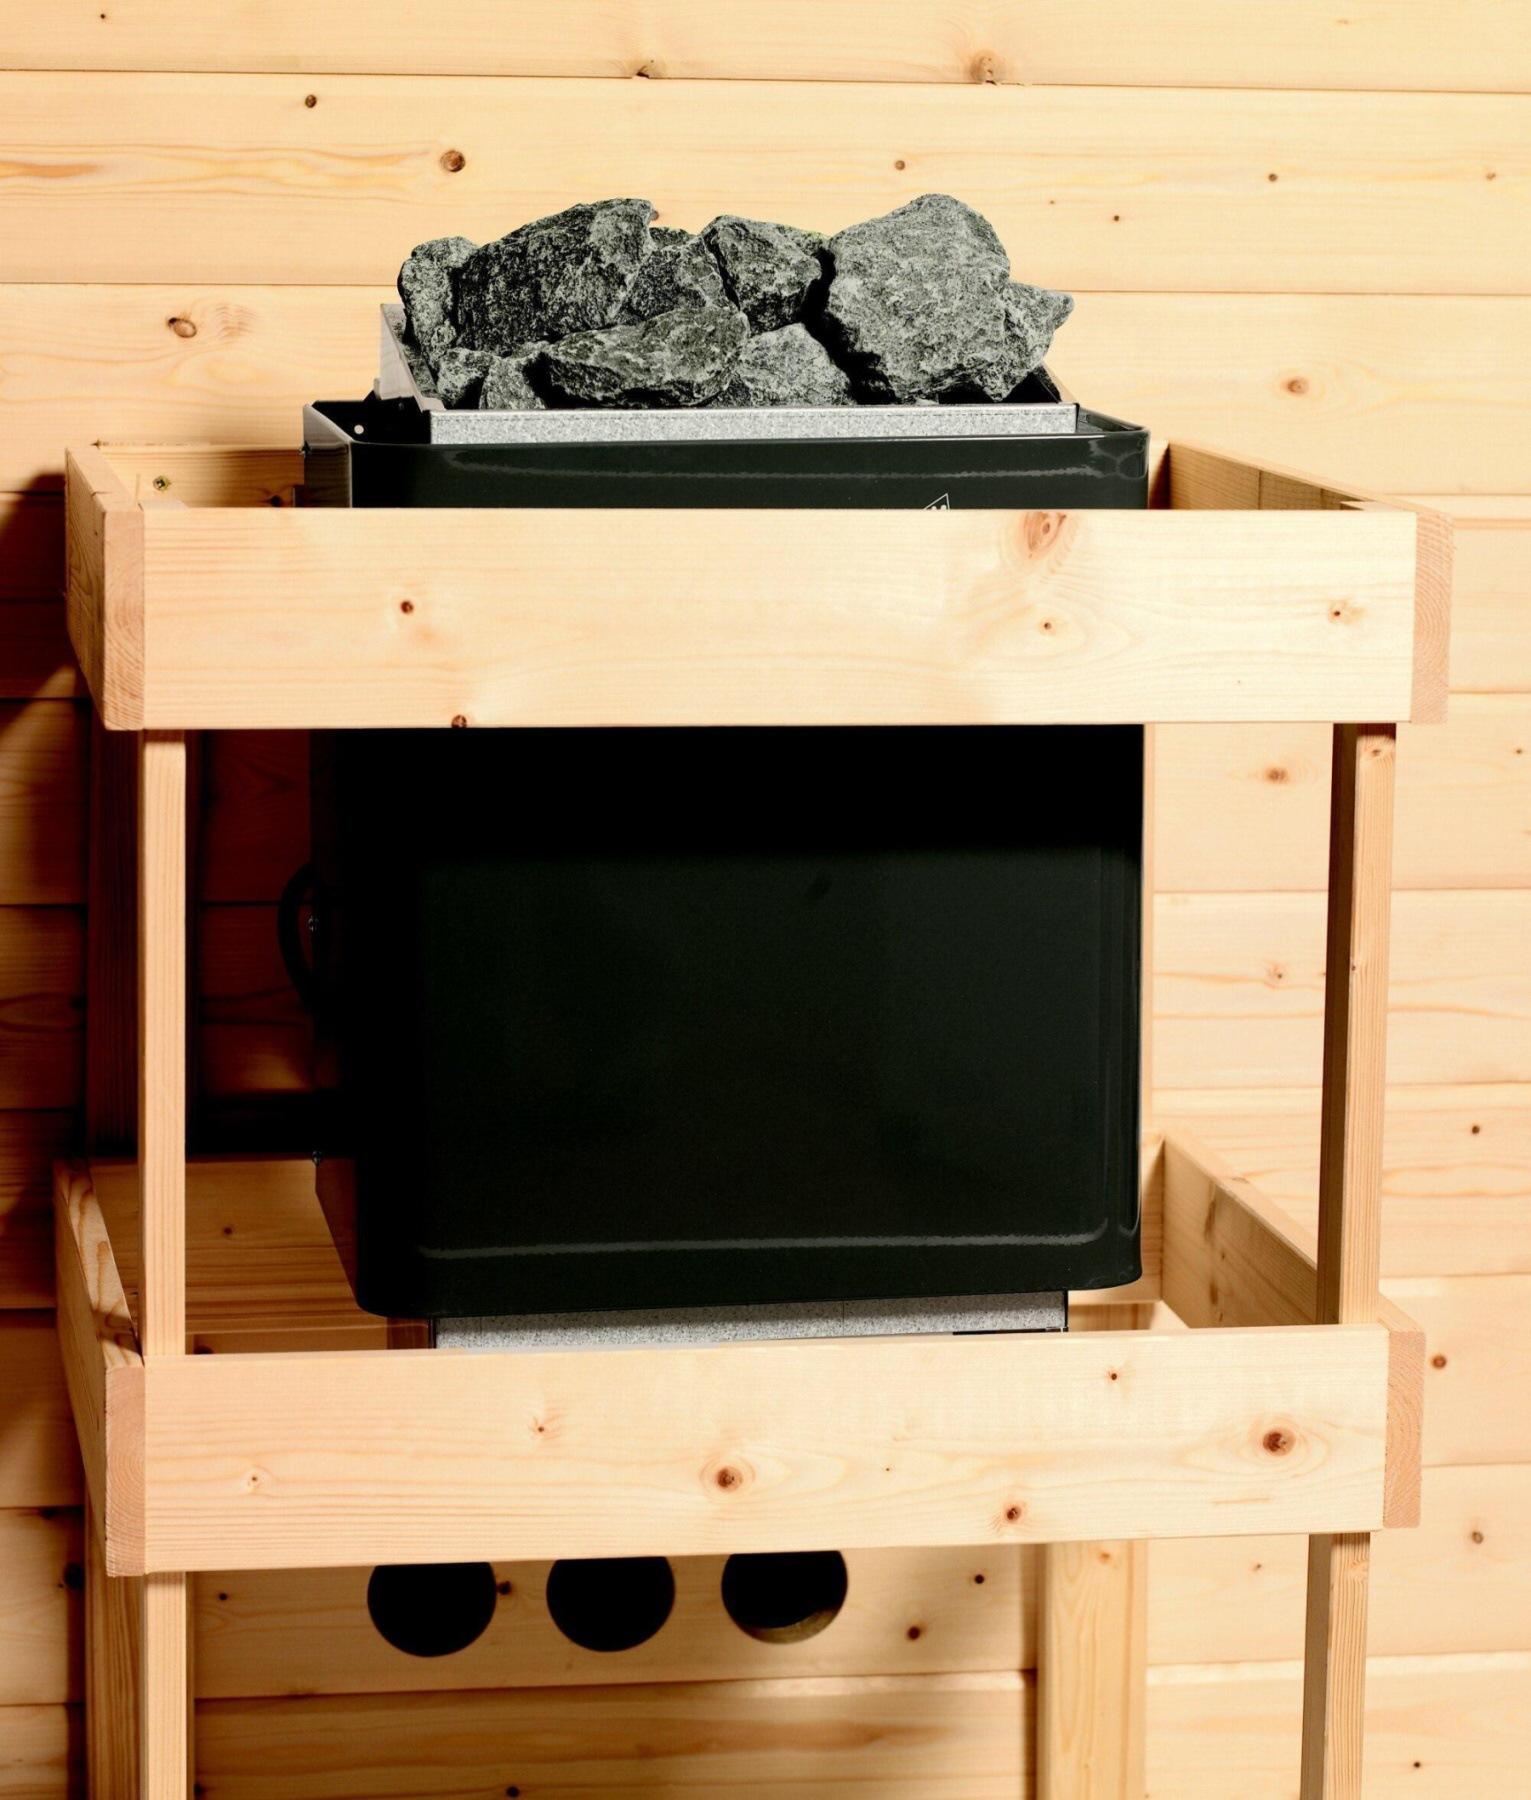 finská sauna KARIBU ELEA (6170)  - set s kamny 3,6 kW (71312)